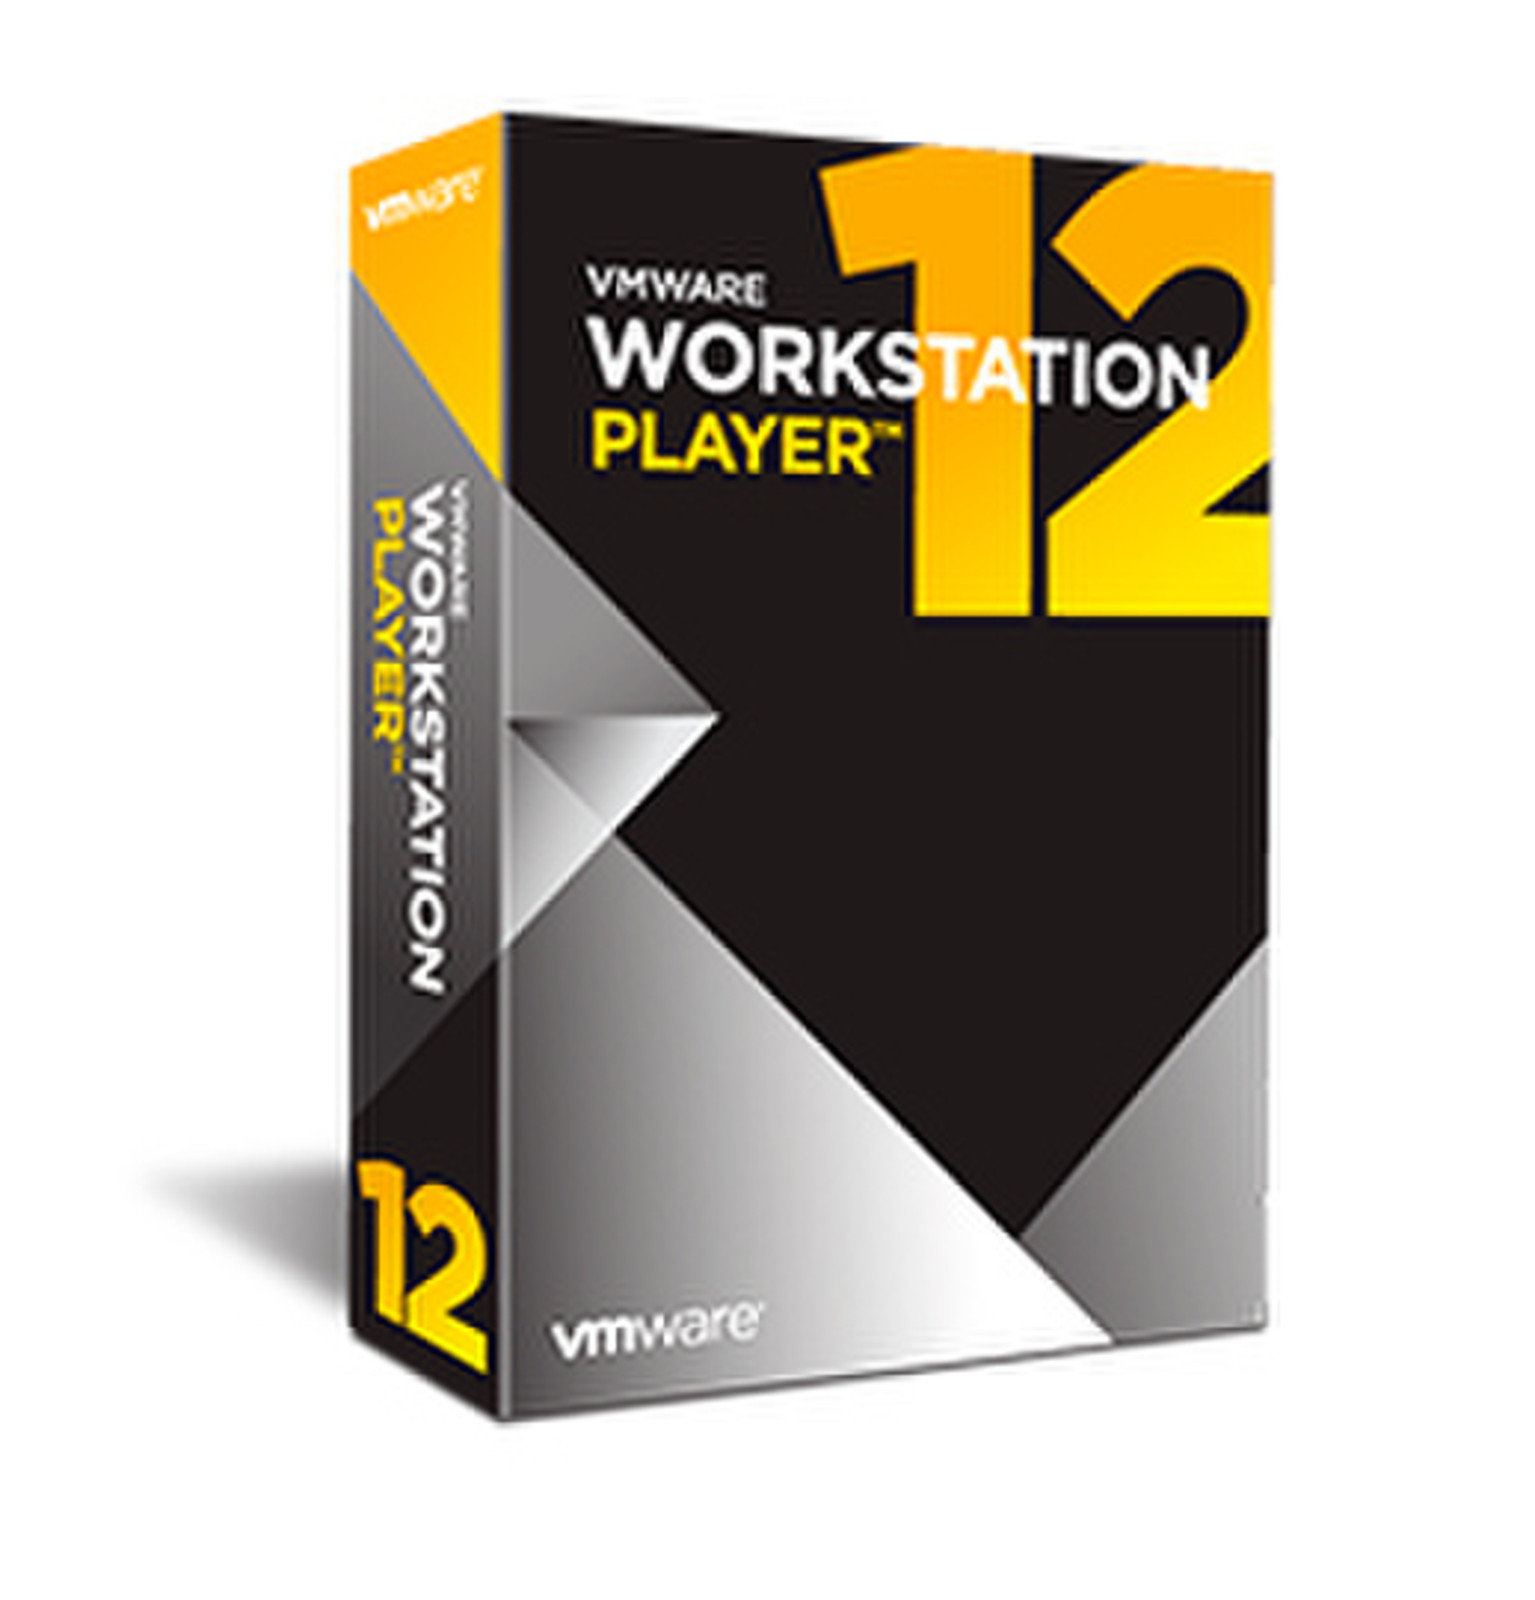 vmware workstation 12 player version 12.5.9 download